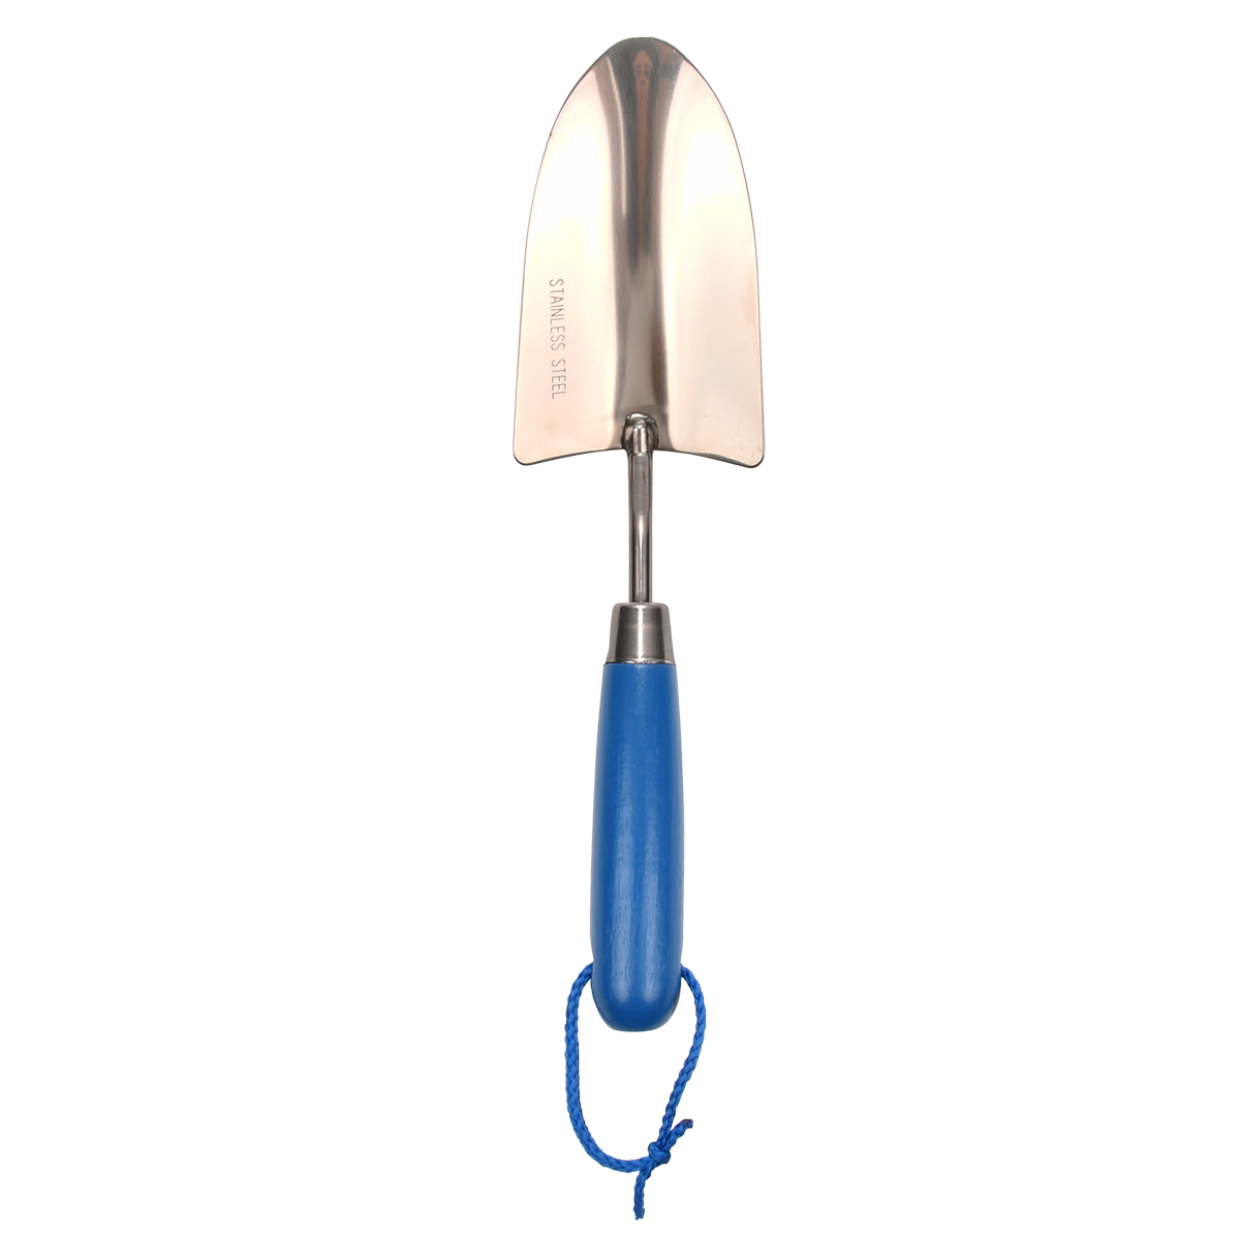 Hand shovel (3 shades of blue)